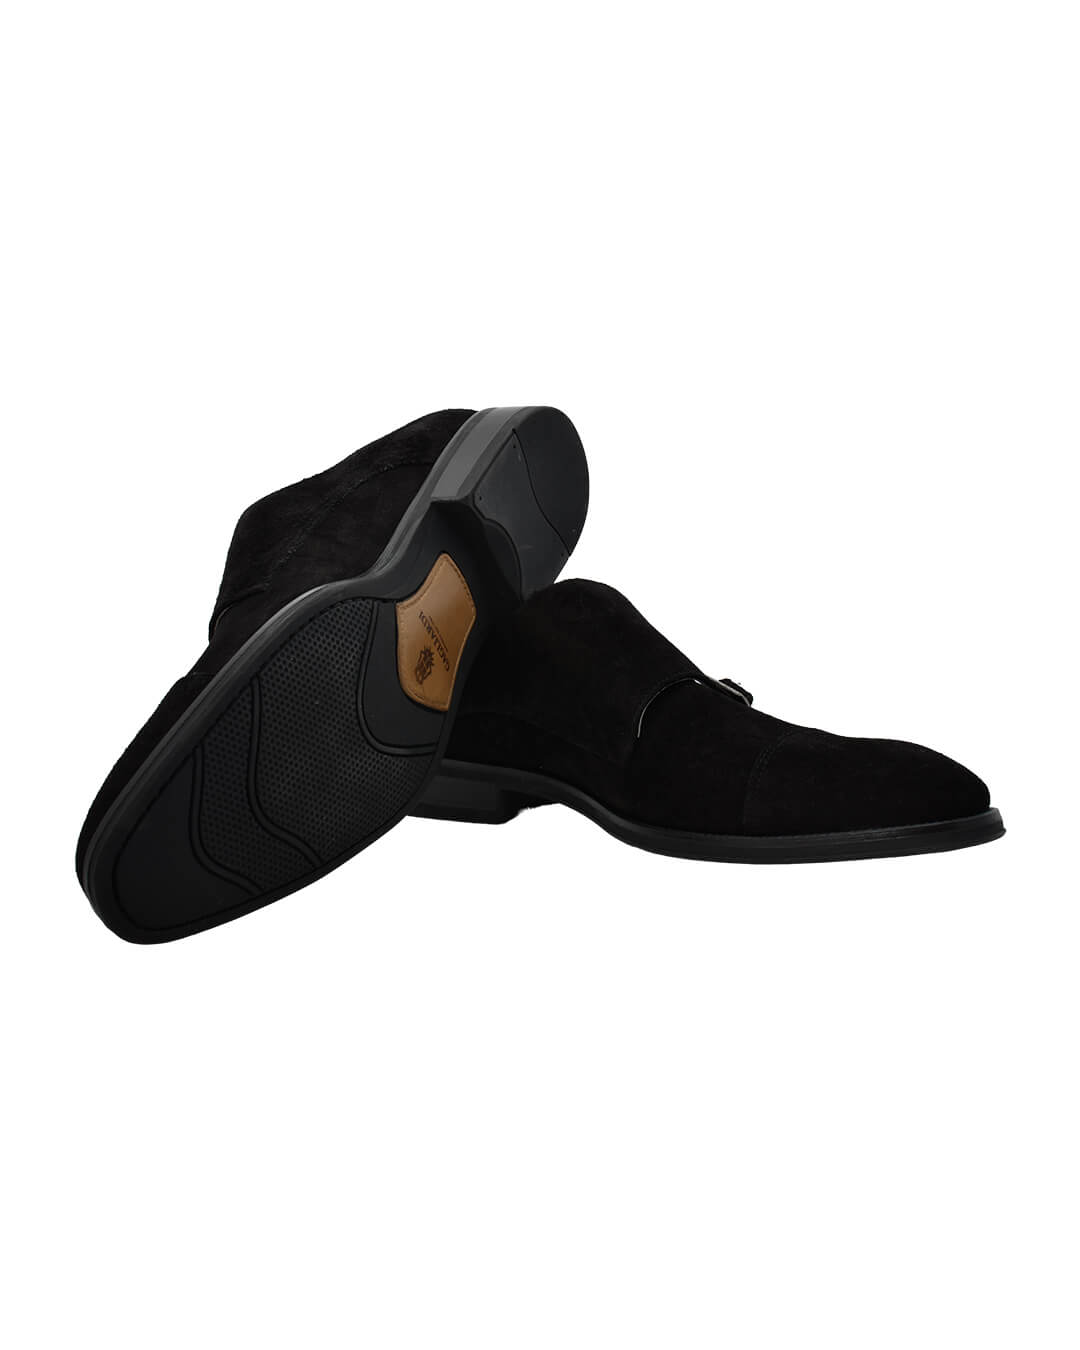 Gagliardi Shoes Gagliardi Black Suede Double Monk Shoes